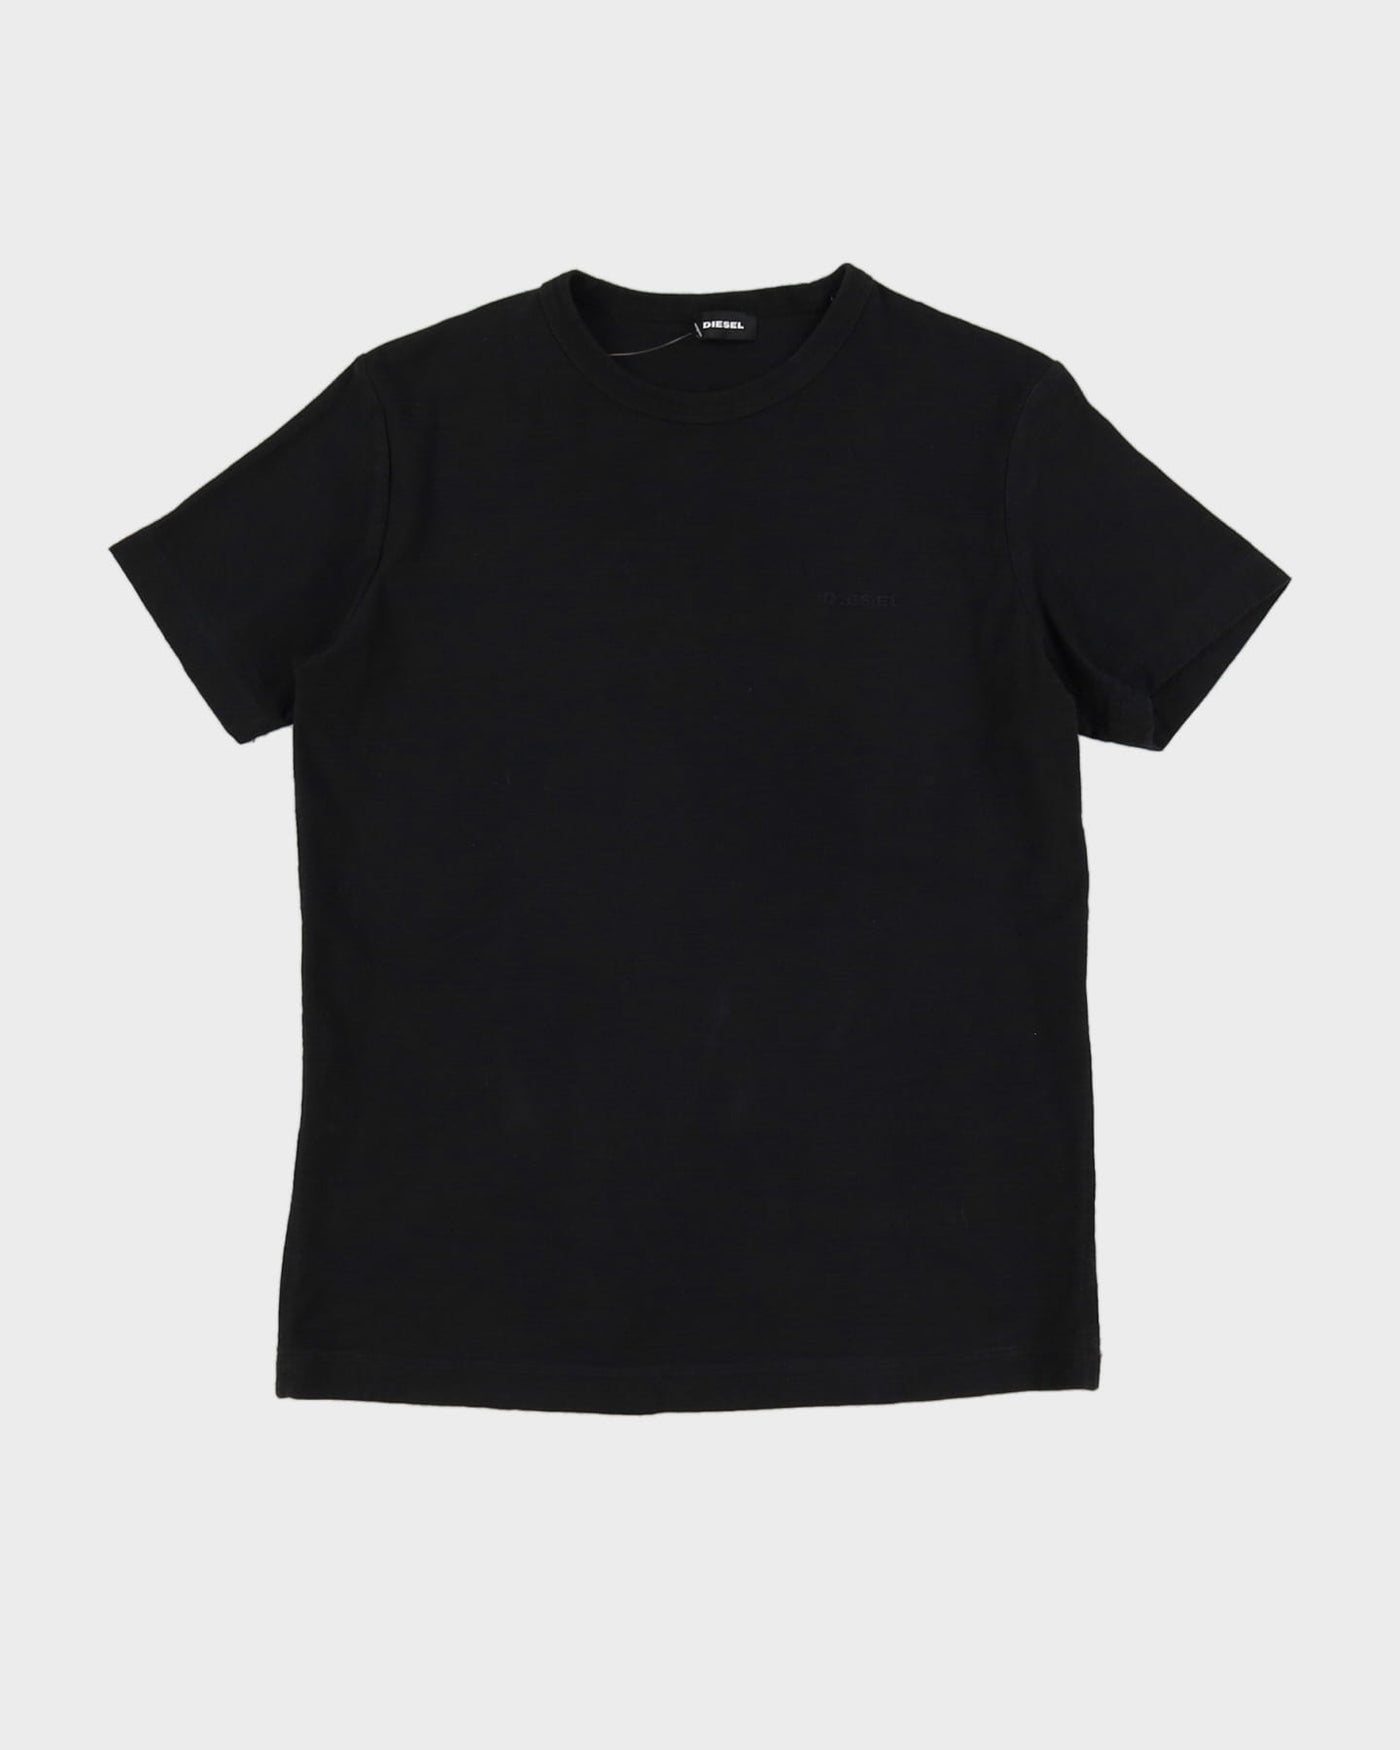 Diesel Black T-Shirt - M